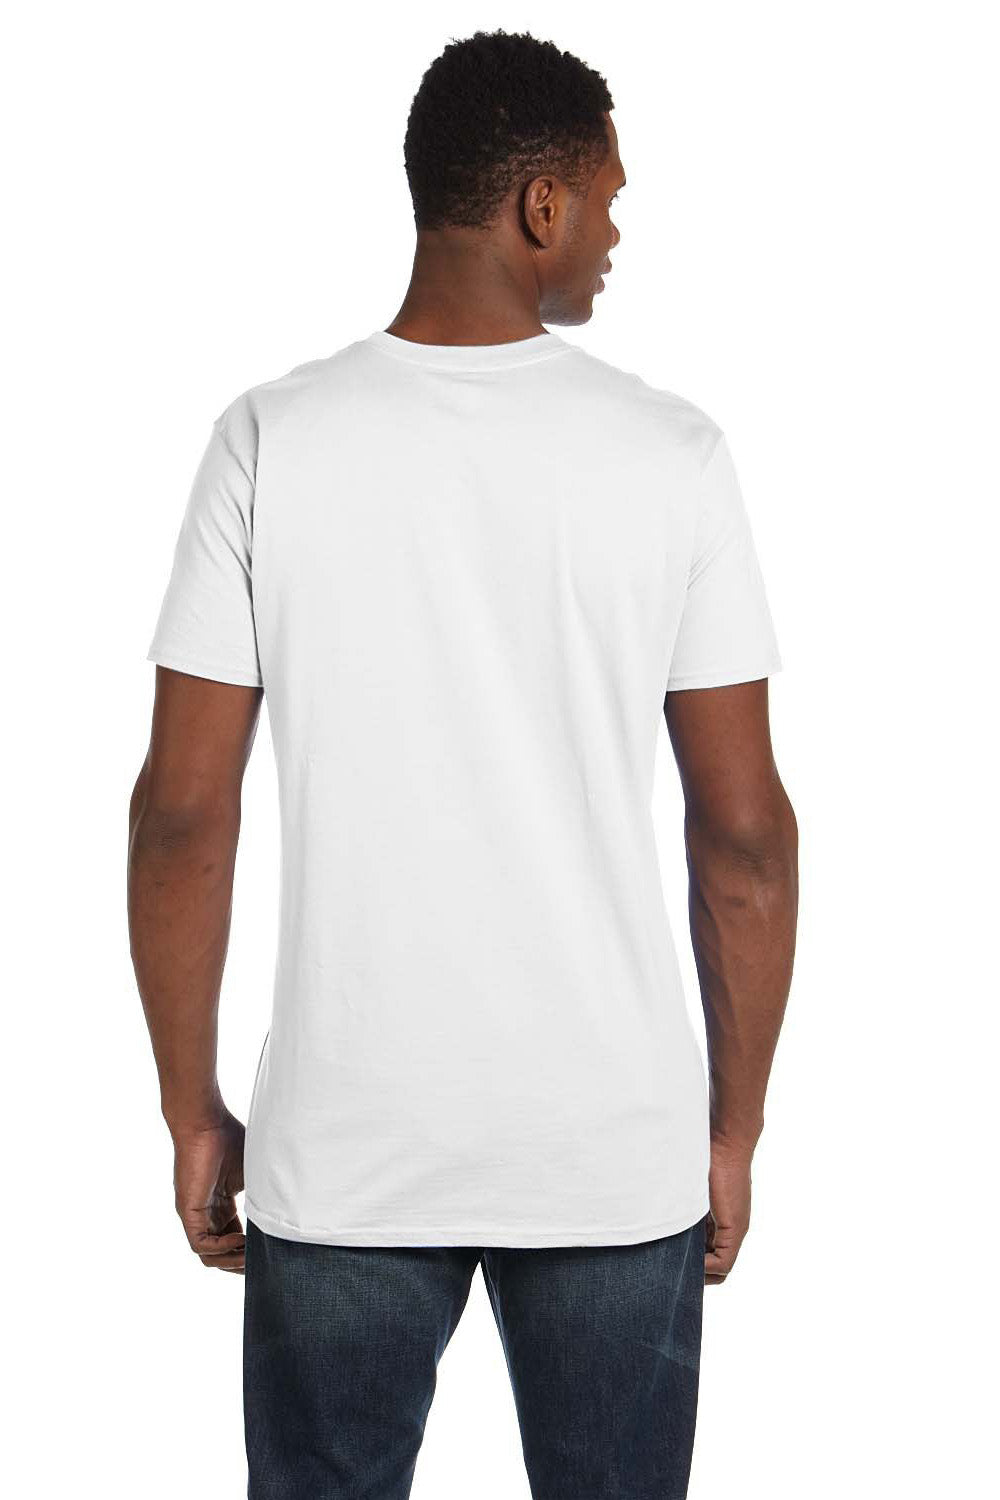 Hanes 498PT Mens Perfect-T PreTreat Short Sleeve Crewneck T-Shirt White Back